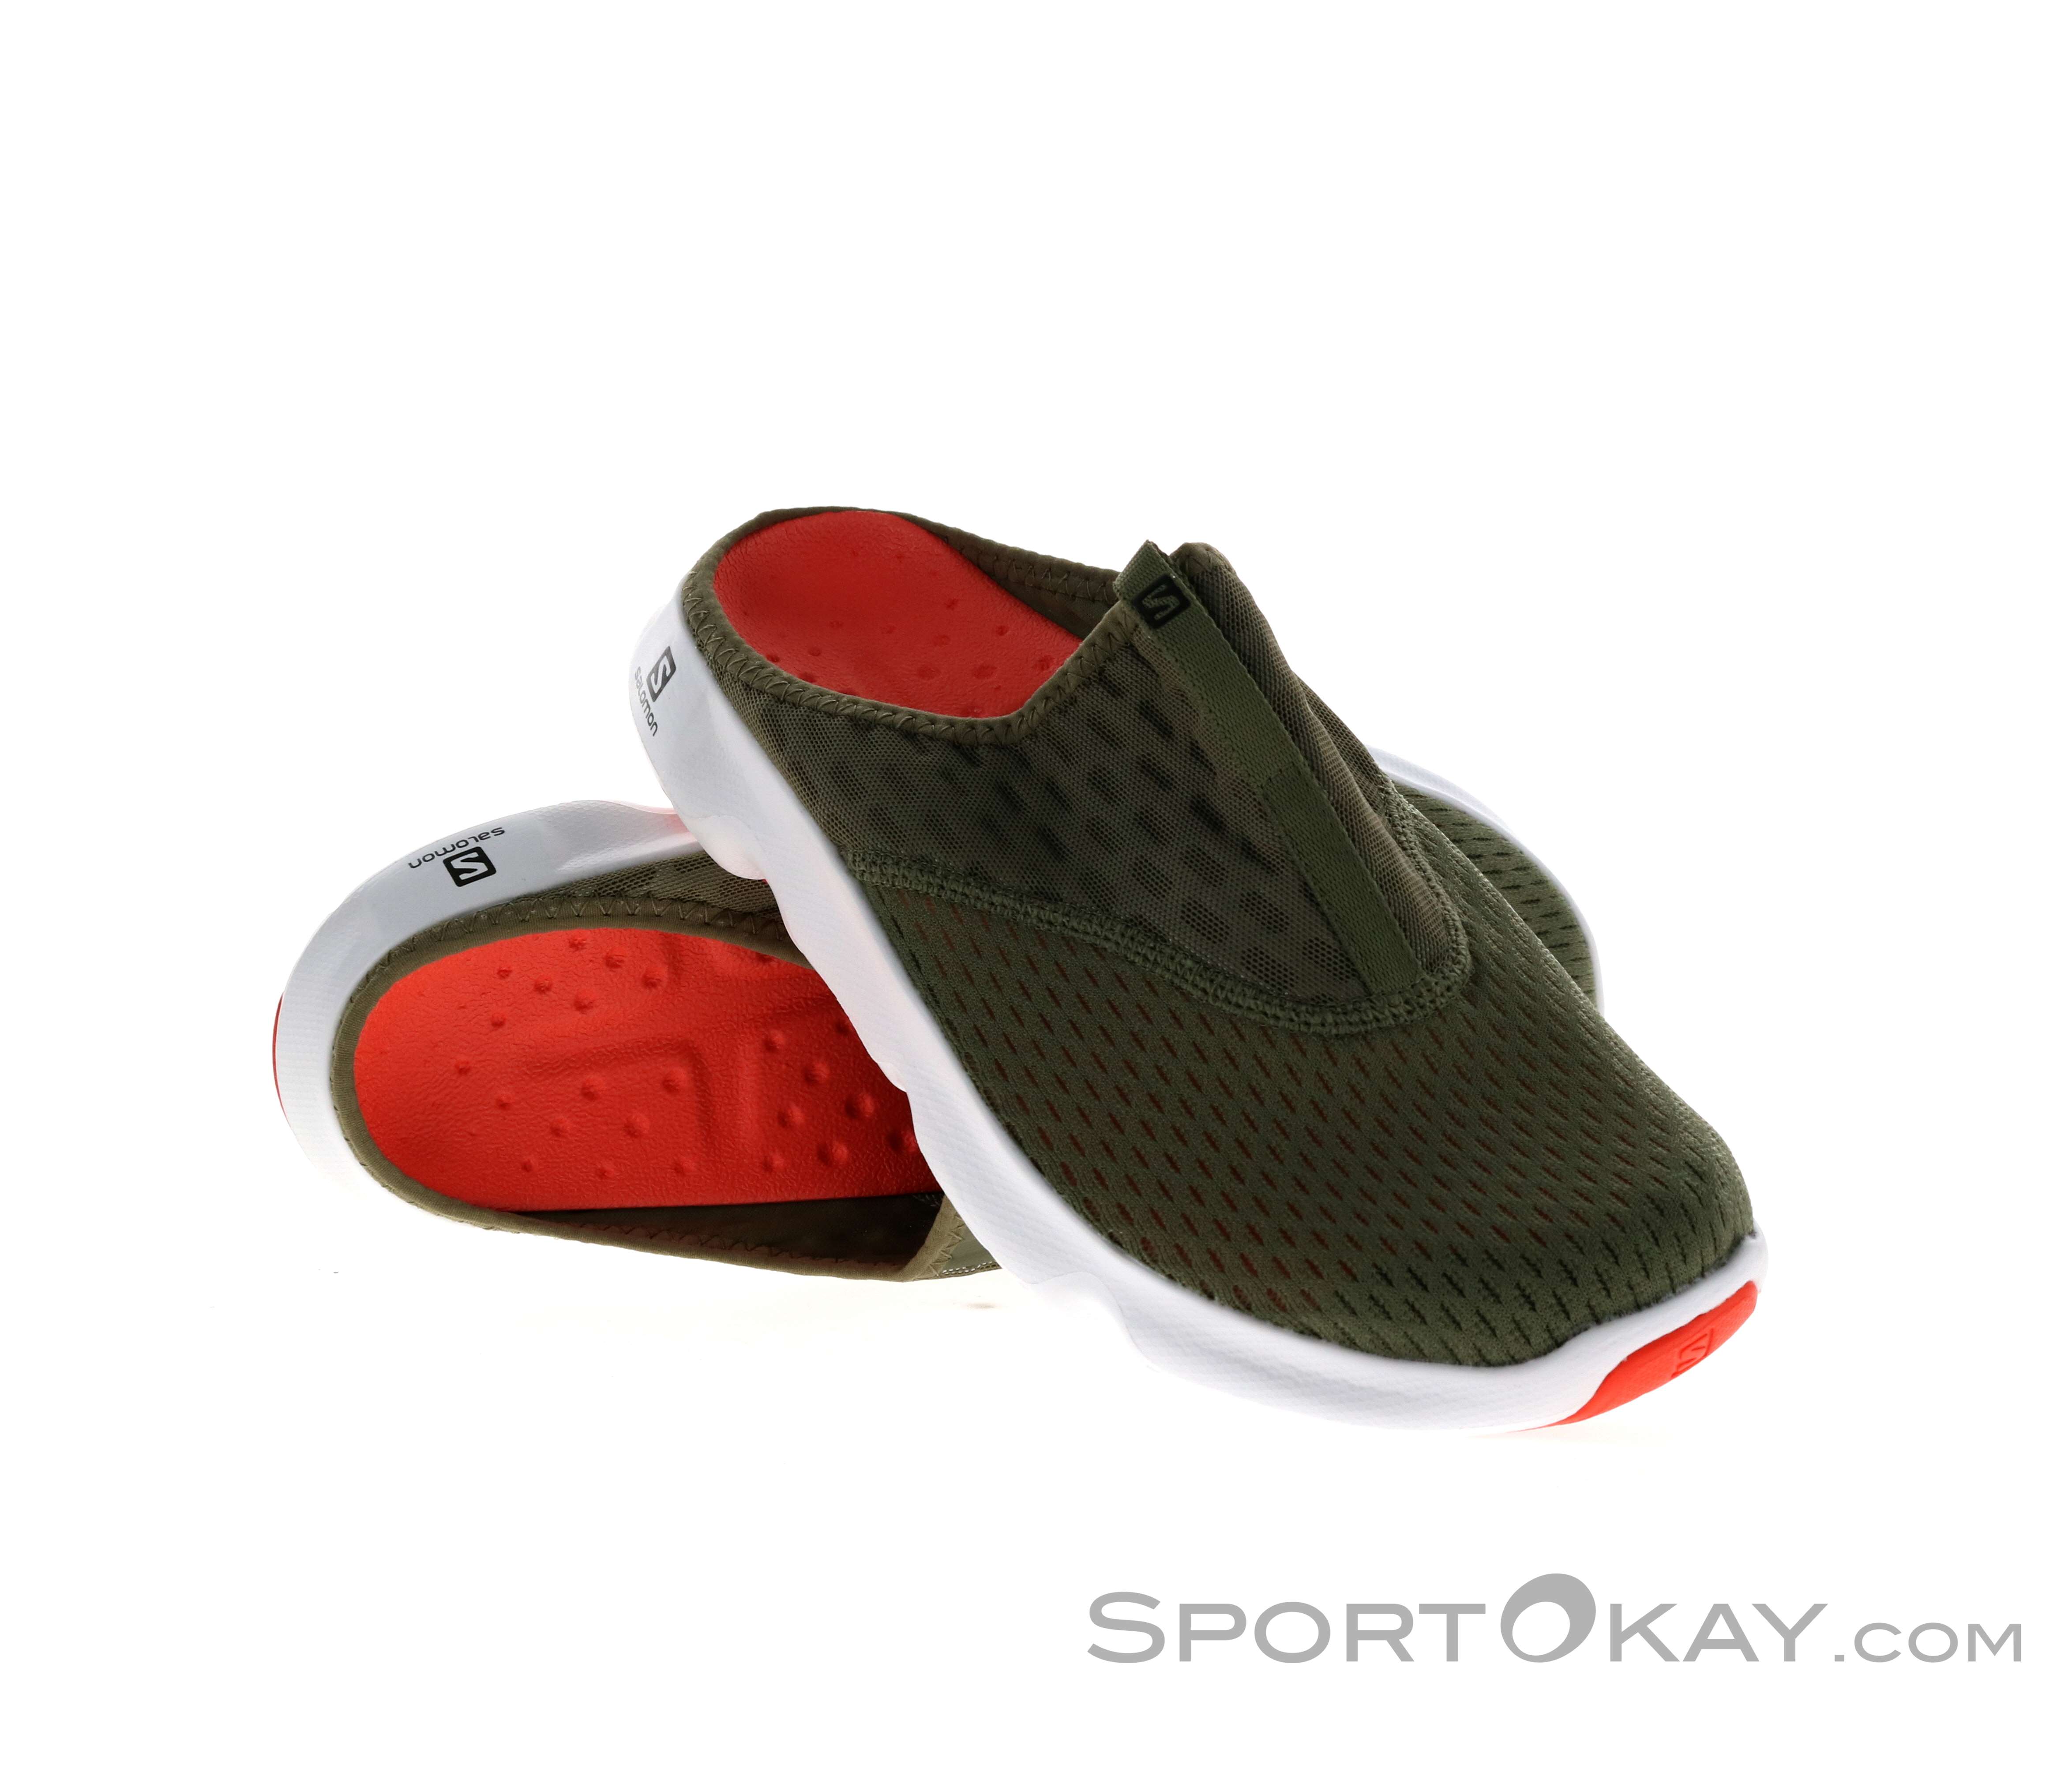 Salomon Reelax Slide 5.0 - Sandals Men's, Product Review